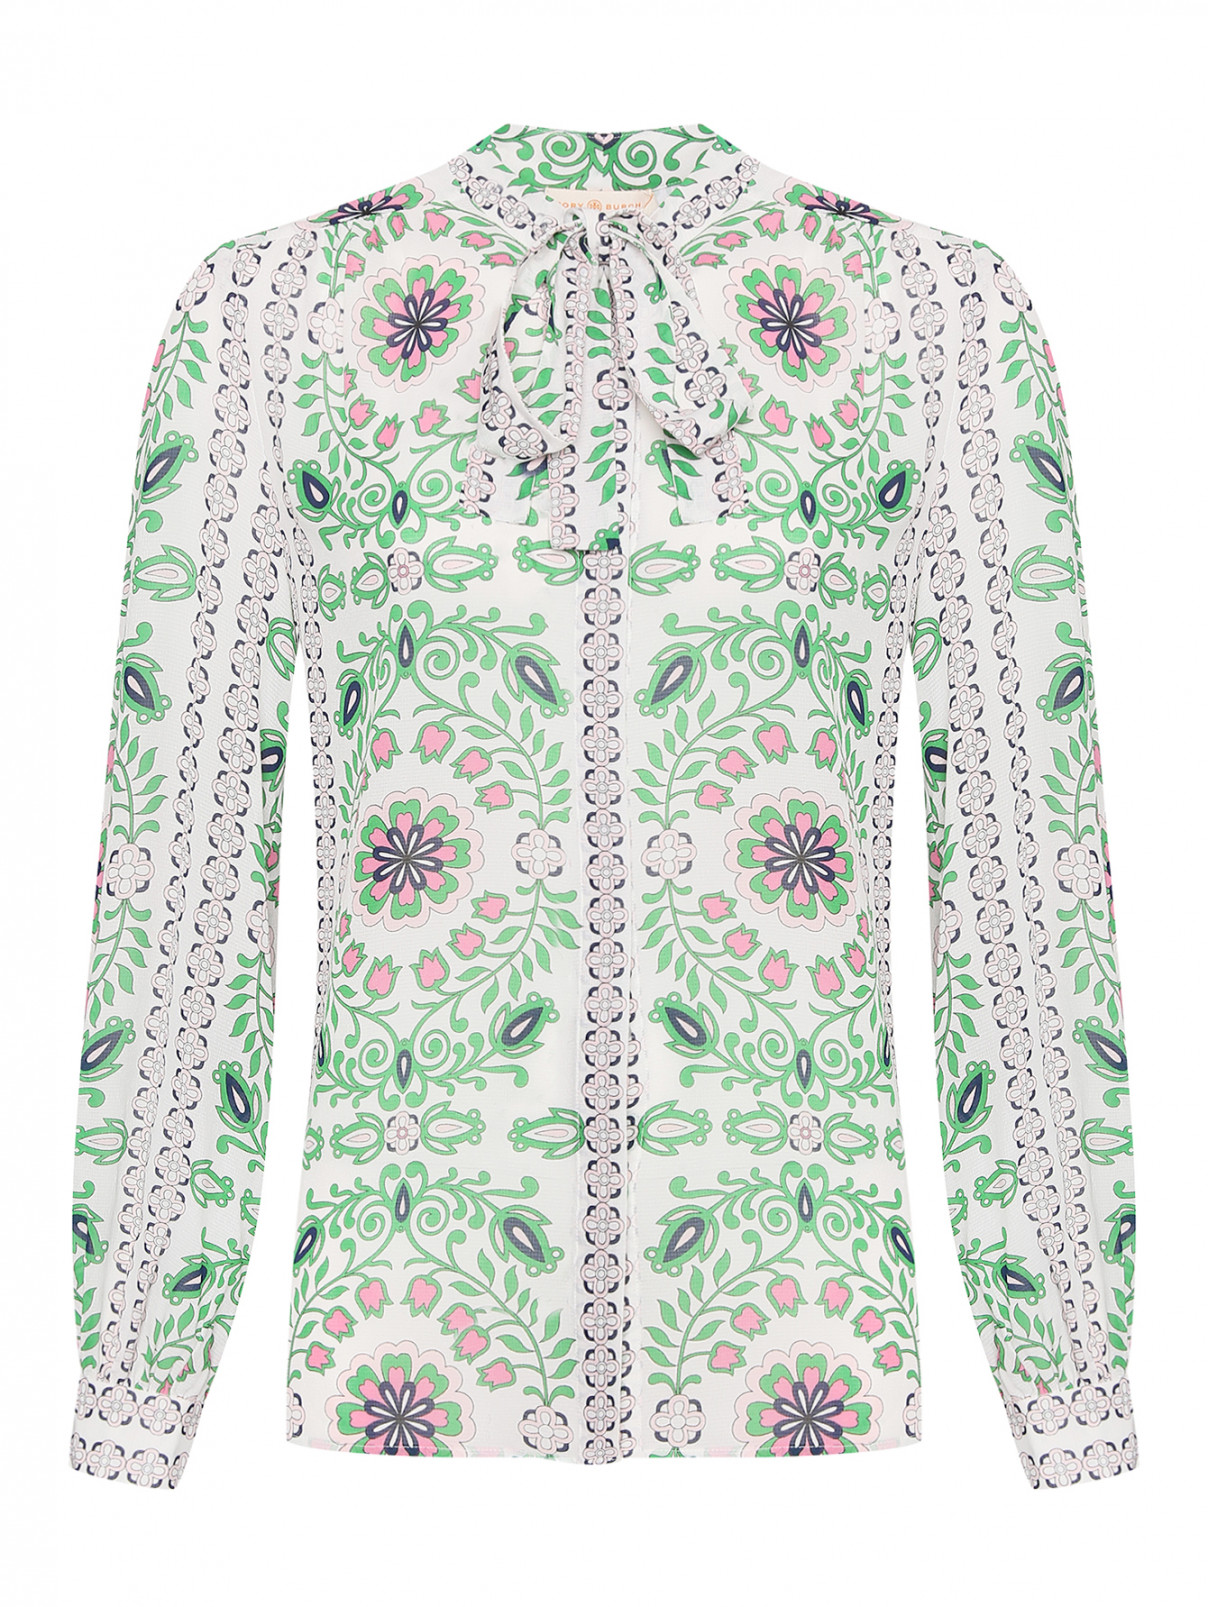 Блуза из шелка с узором Tory Burch  –  Общий вид  – Цвет:  Узор